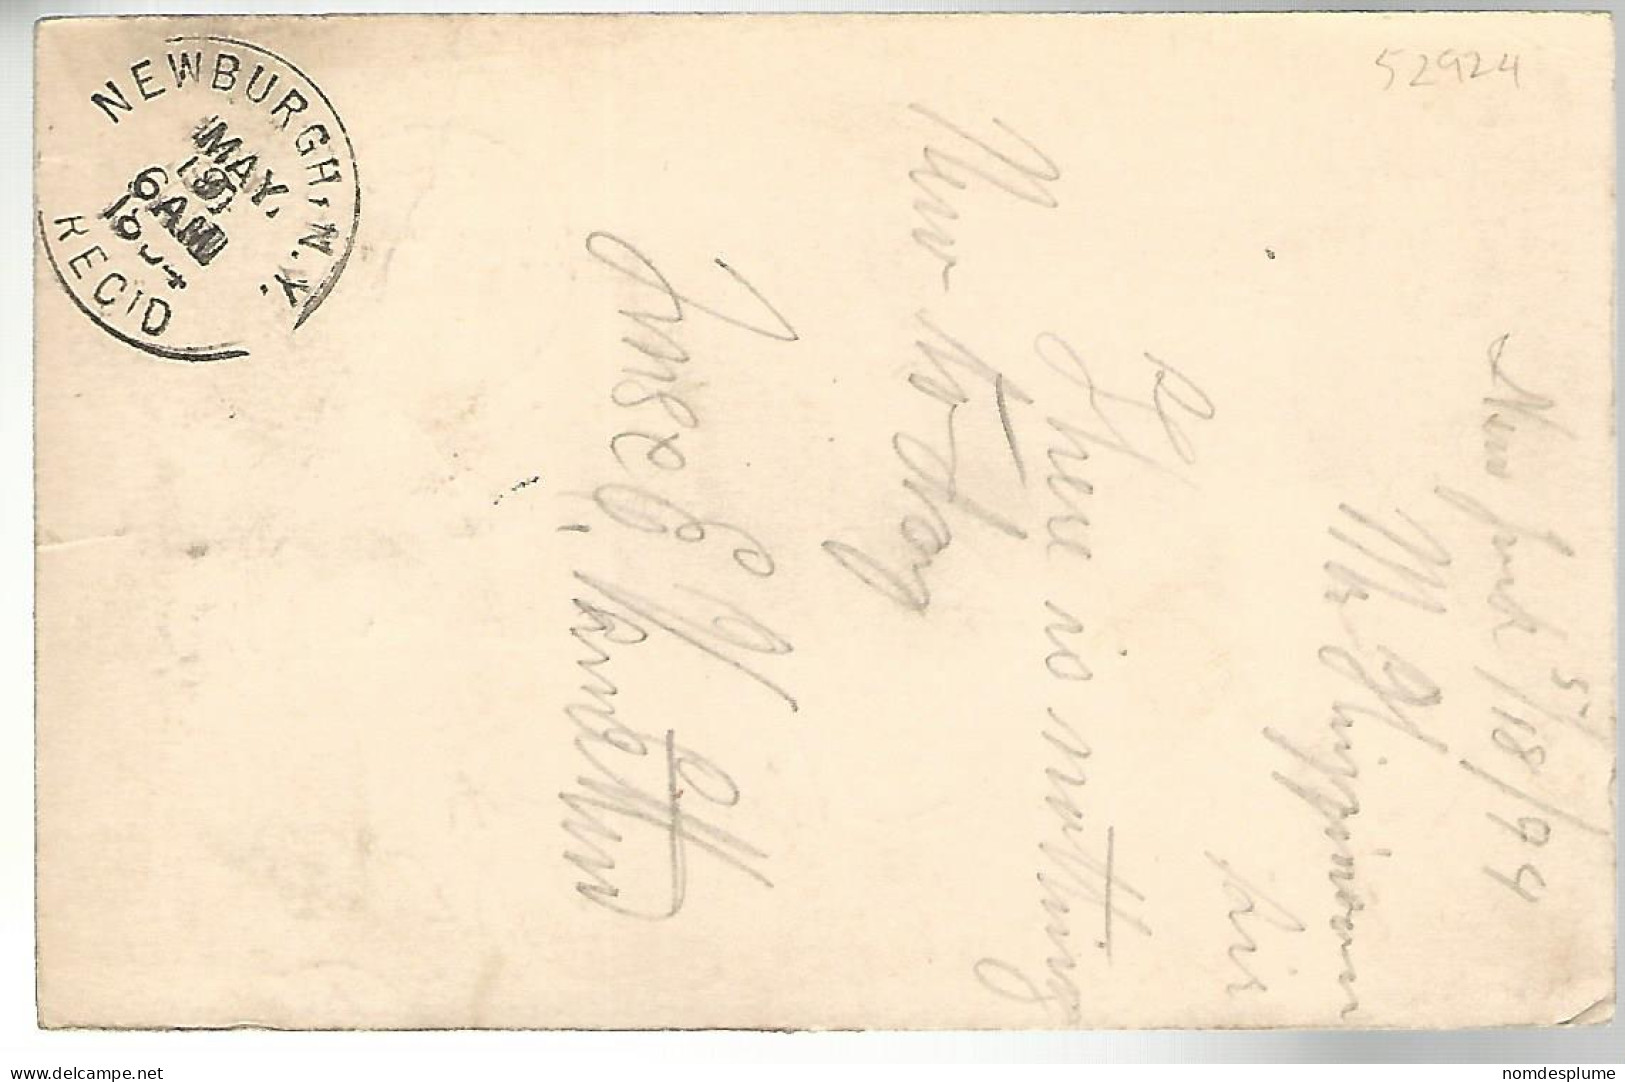 52924 ) USA Postal Stationery Newburgh New York Postmarks  Duplex 1894 - ...-1900